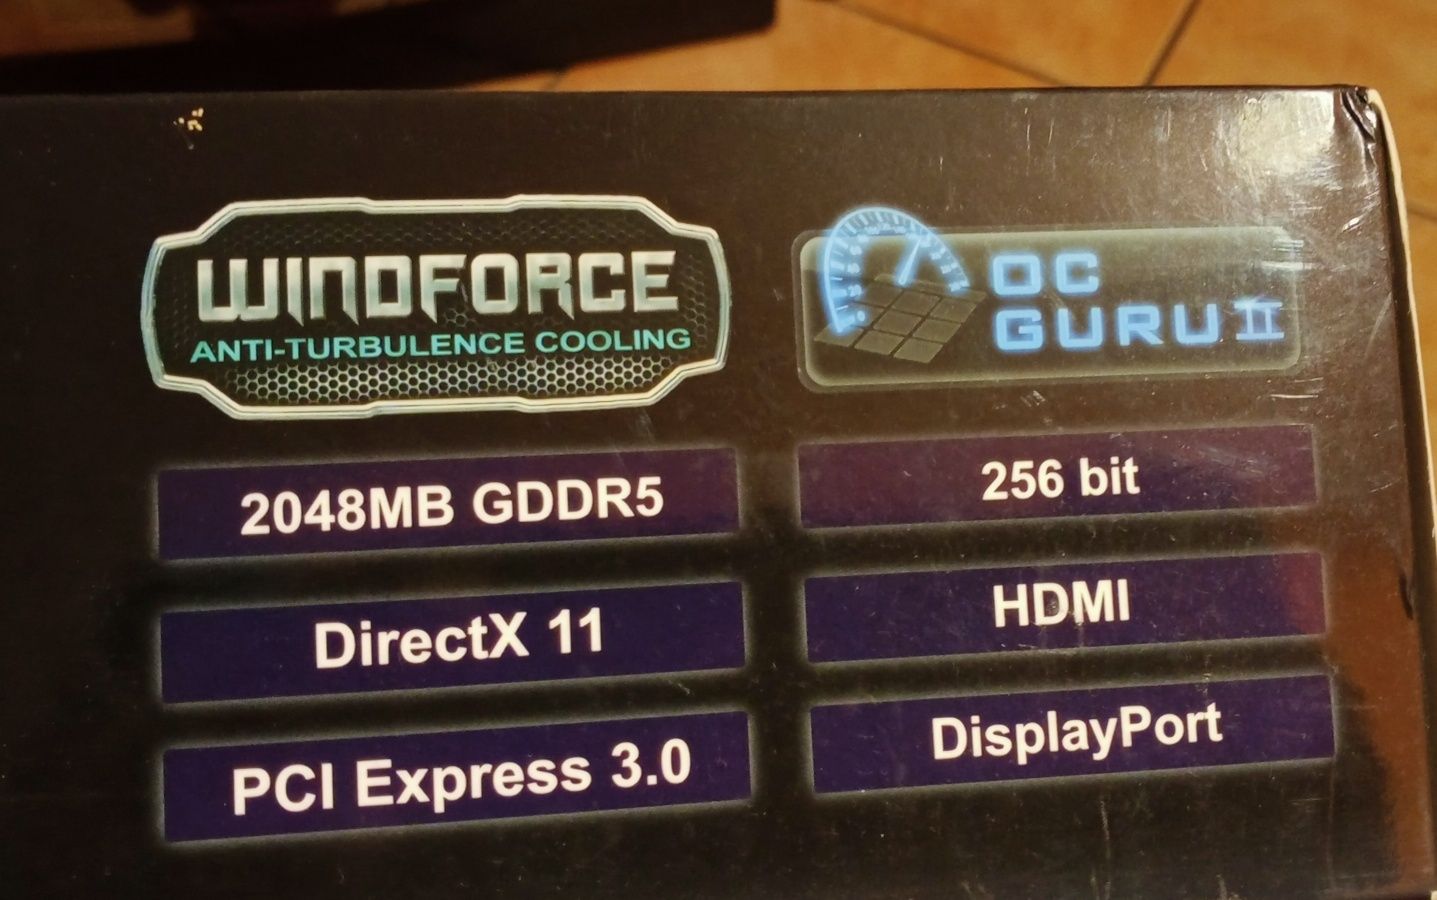 Gigabyte GeForce GTX 760 NVIDIA 2GB GDDR5